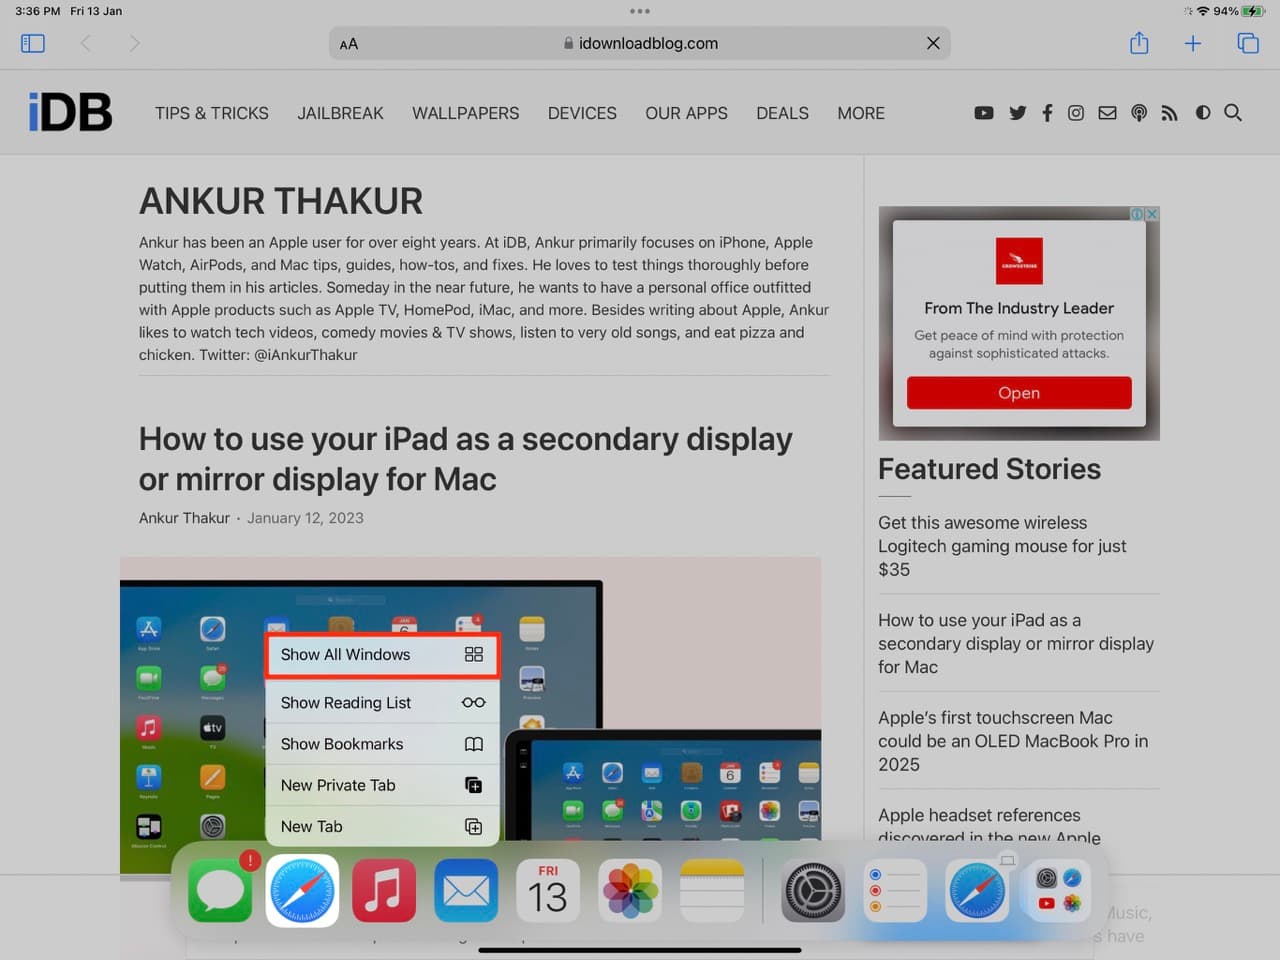 Show All Windows for Safari on iPad